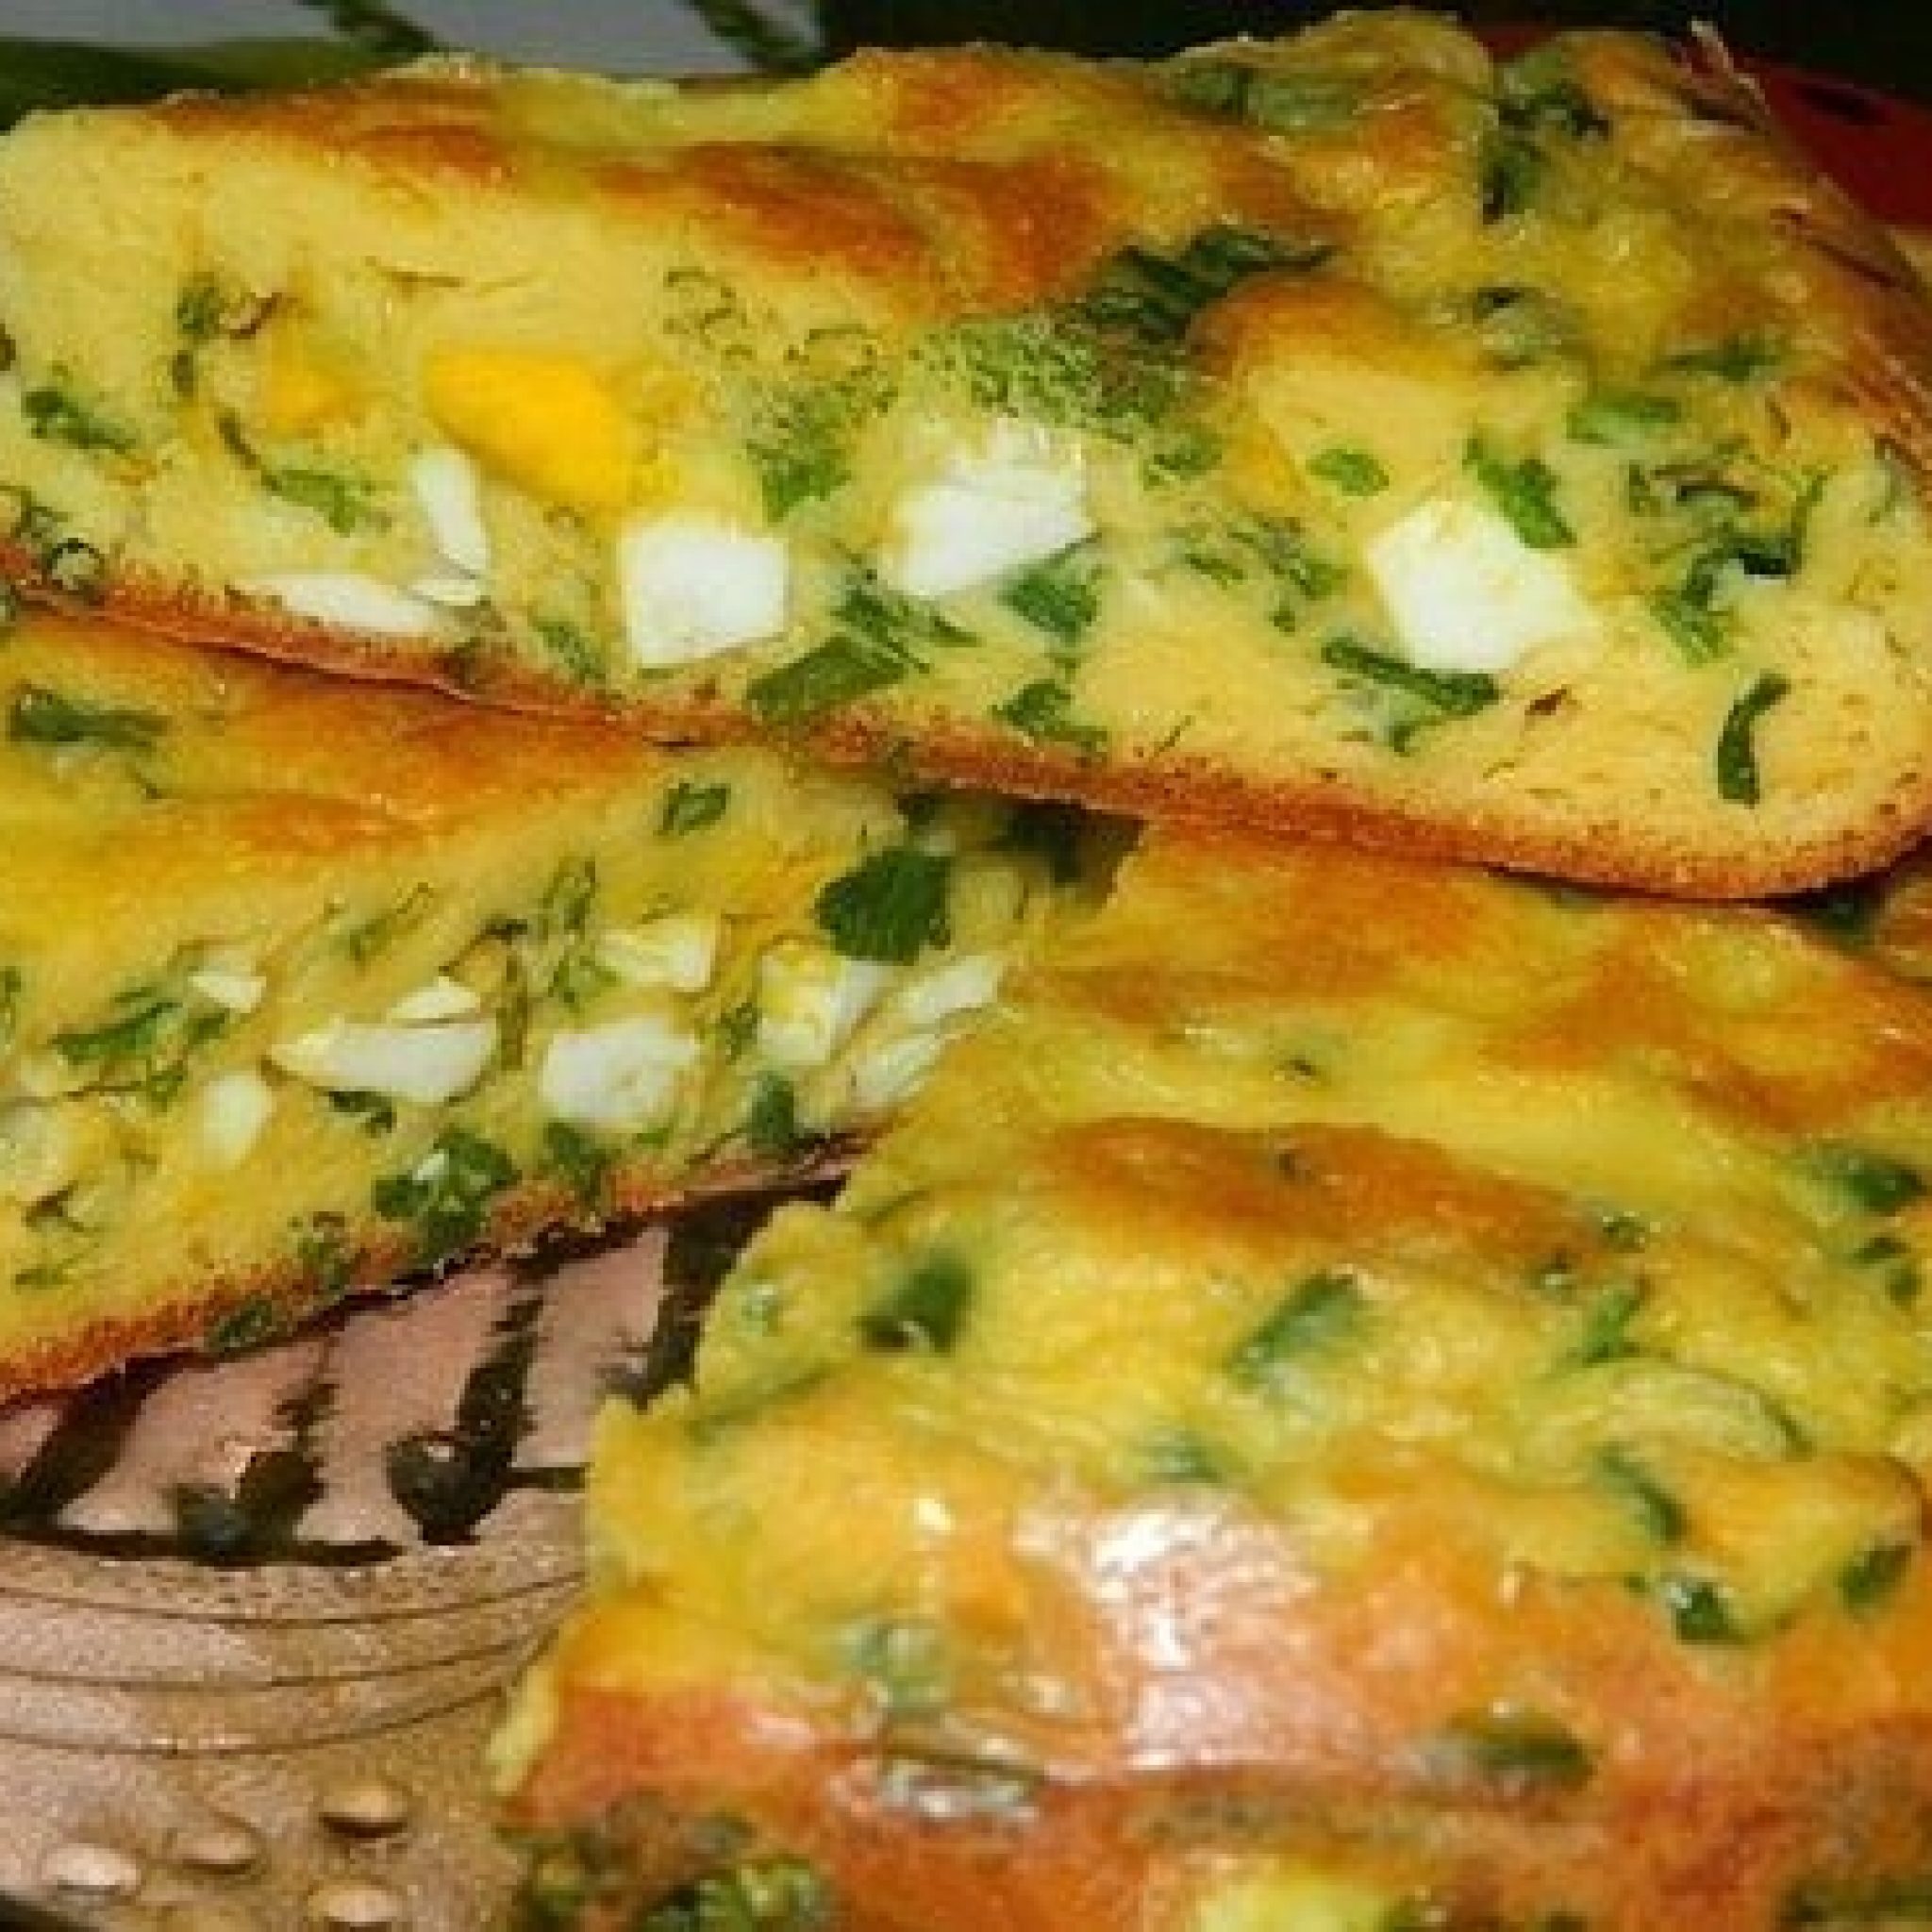 Рецепты зеленого теста. Заливной пирог с зел.луком и яйцом. Заливной пирог с яйцом и зеленым луком. Заливной пирог с луком и яйцом в духовке. Быстрый (заливной) пирог с зелёным луком и яйцом.